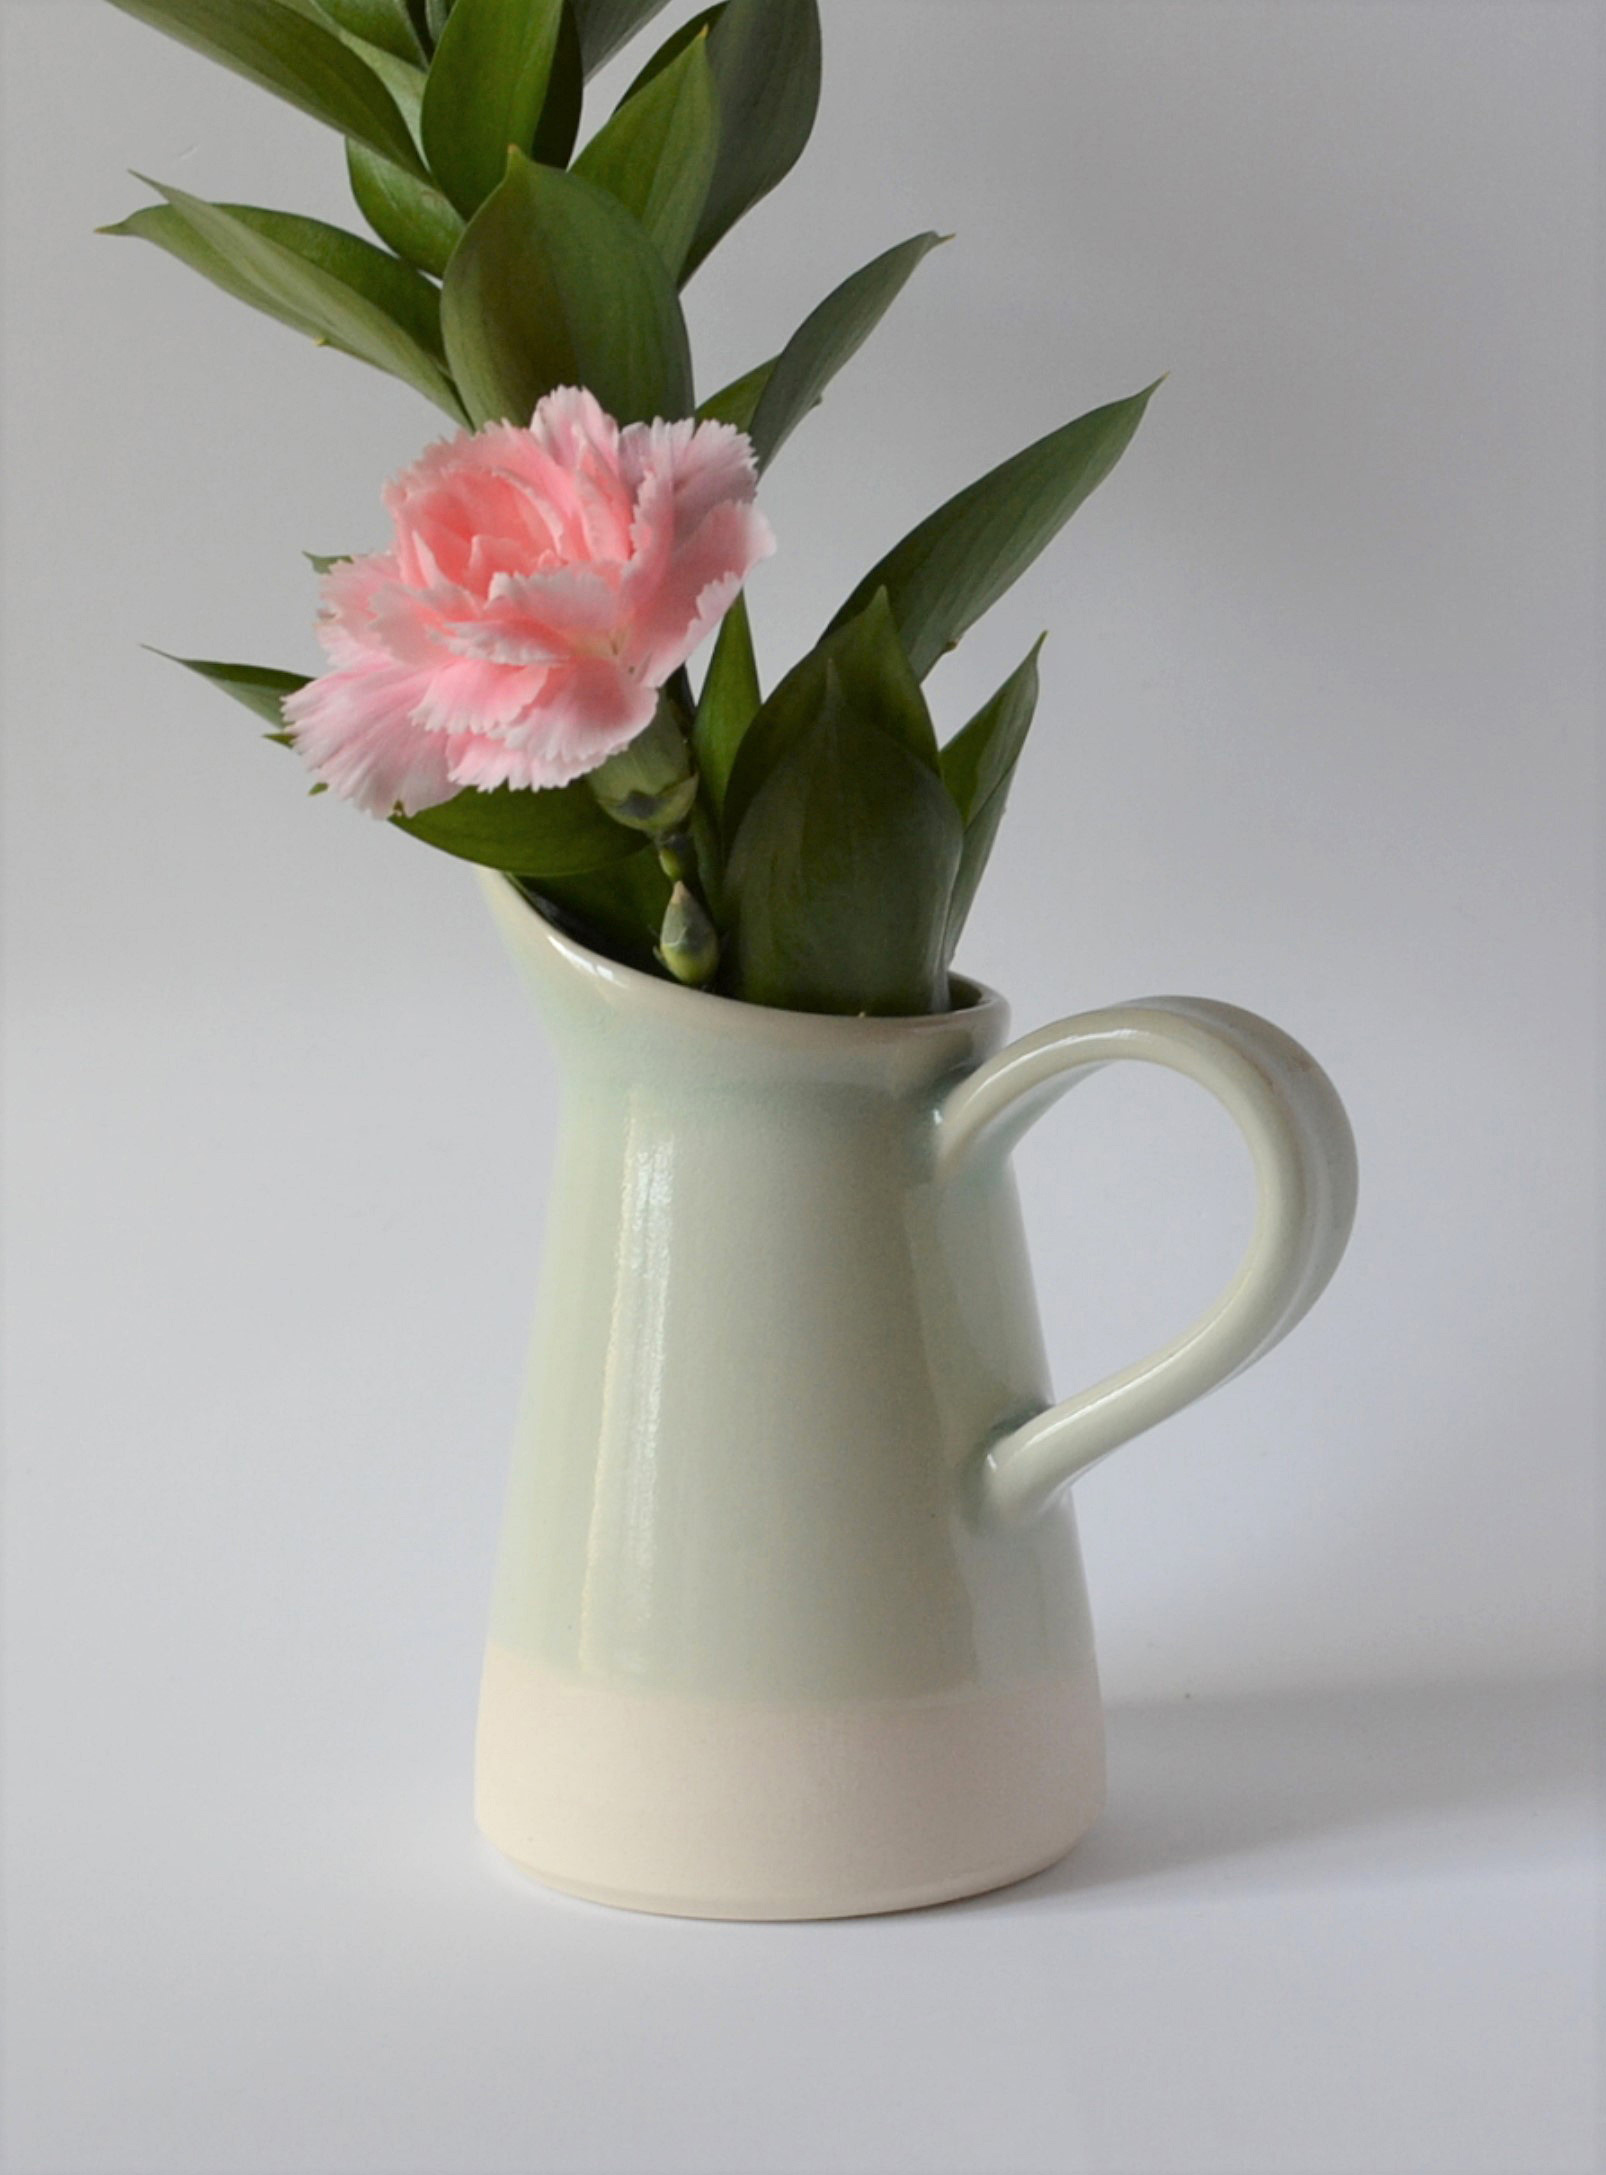 Akai Ceramic Studio - Porcelain mini pitcher vase 11.5 cm tall